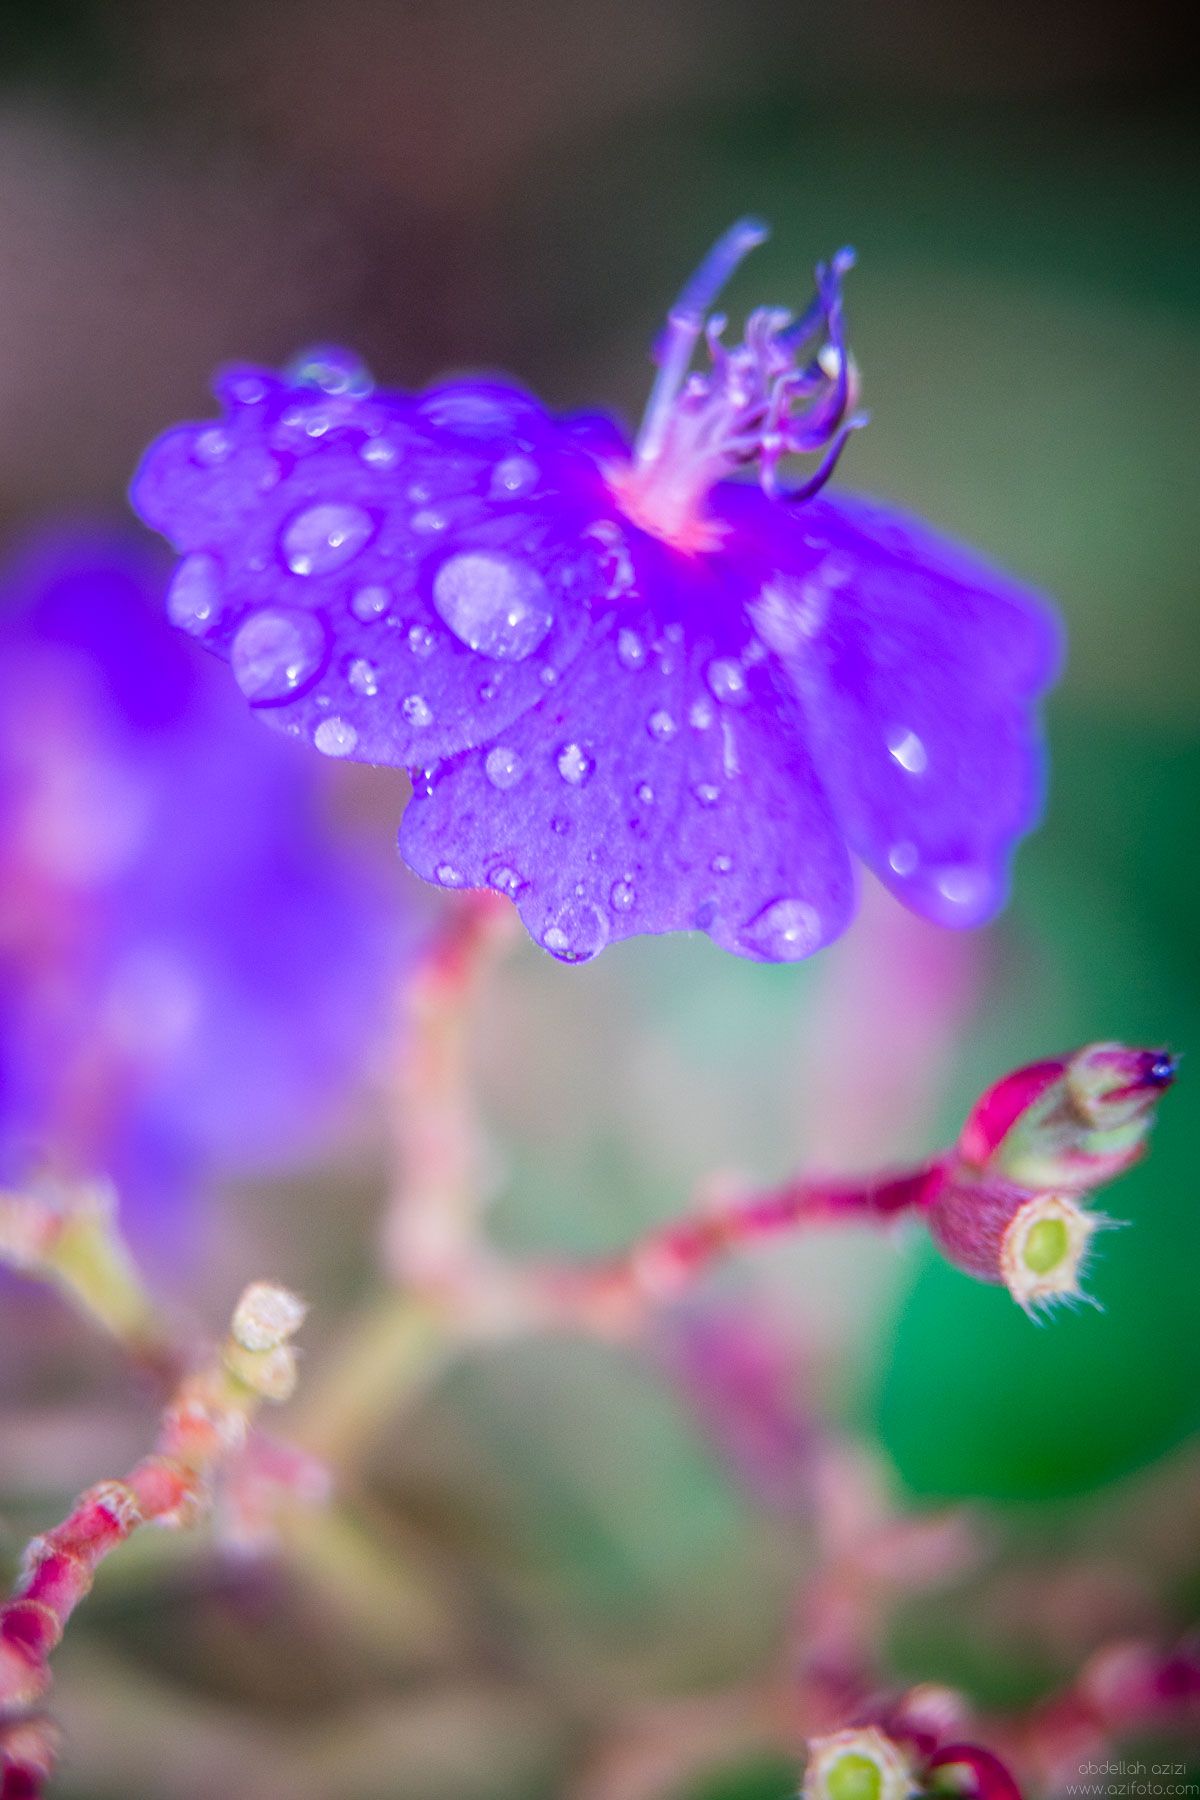 Purpler flower clos up